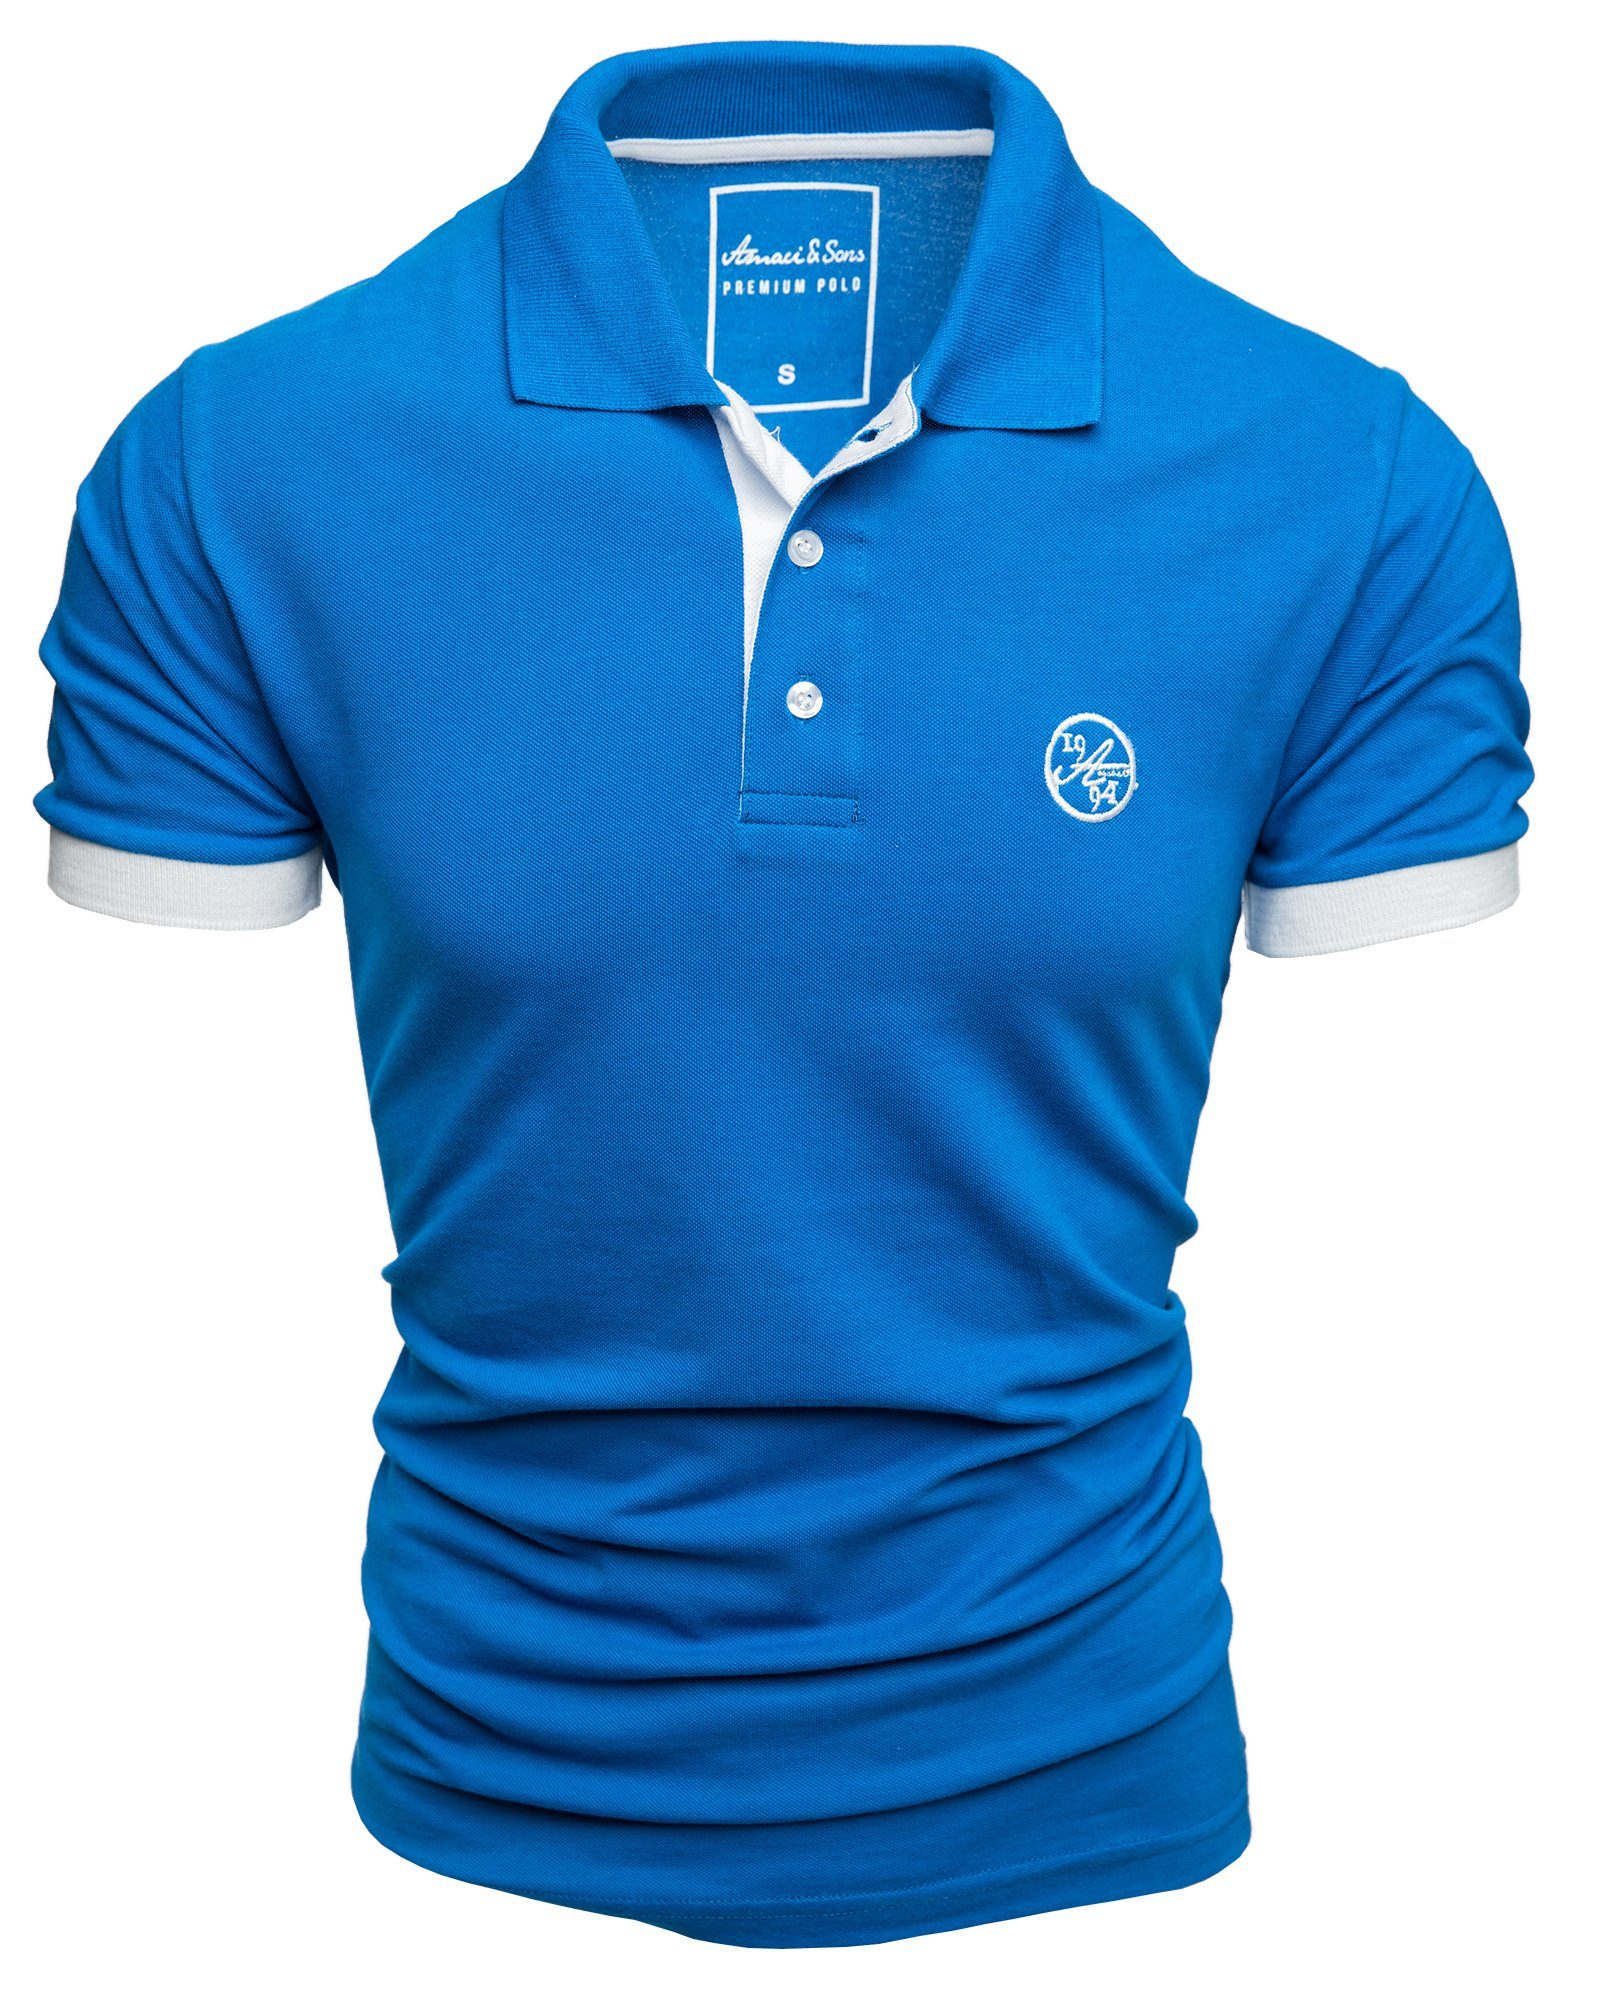 Amaci&Sons Poloshirt MEMPHIS Basic Kontrast Polo Shirt Royalblau/Weiß